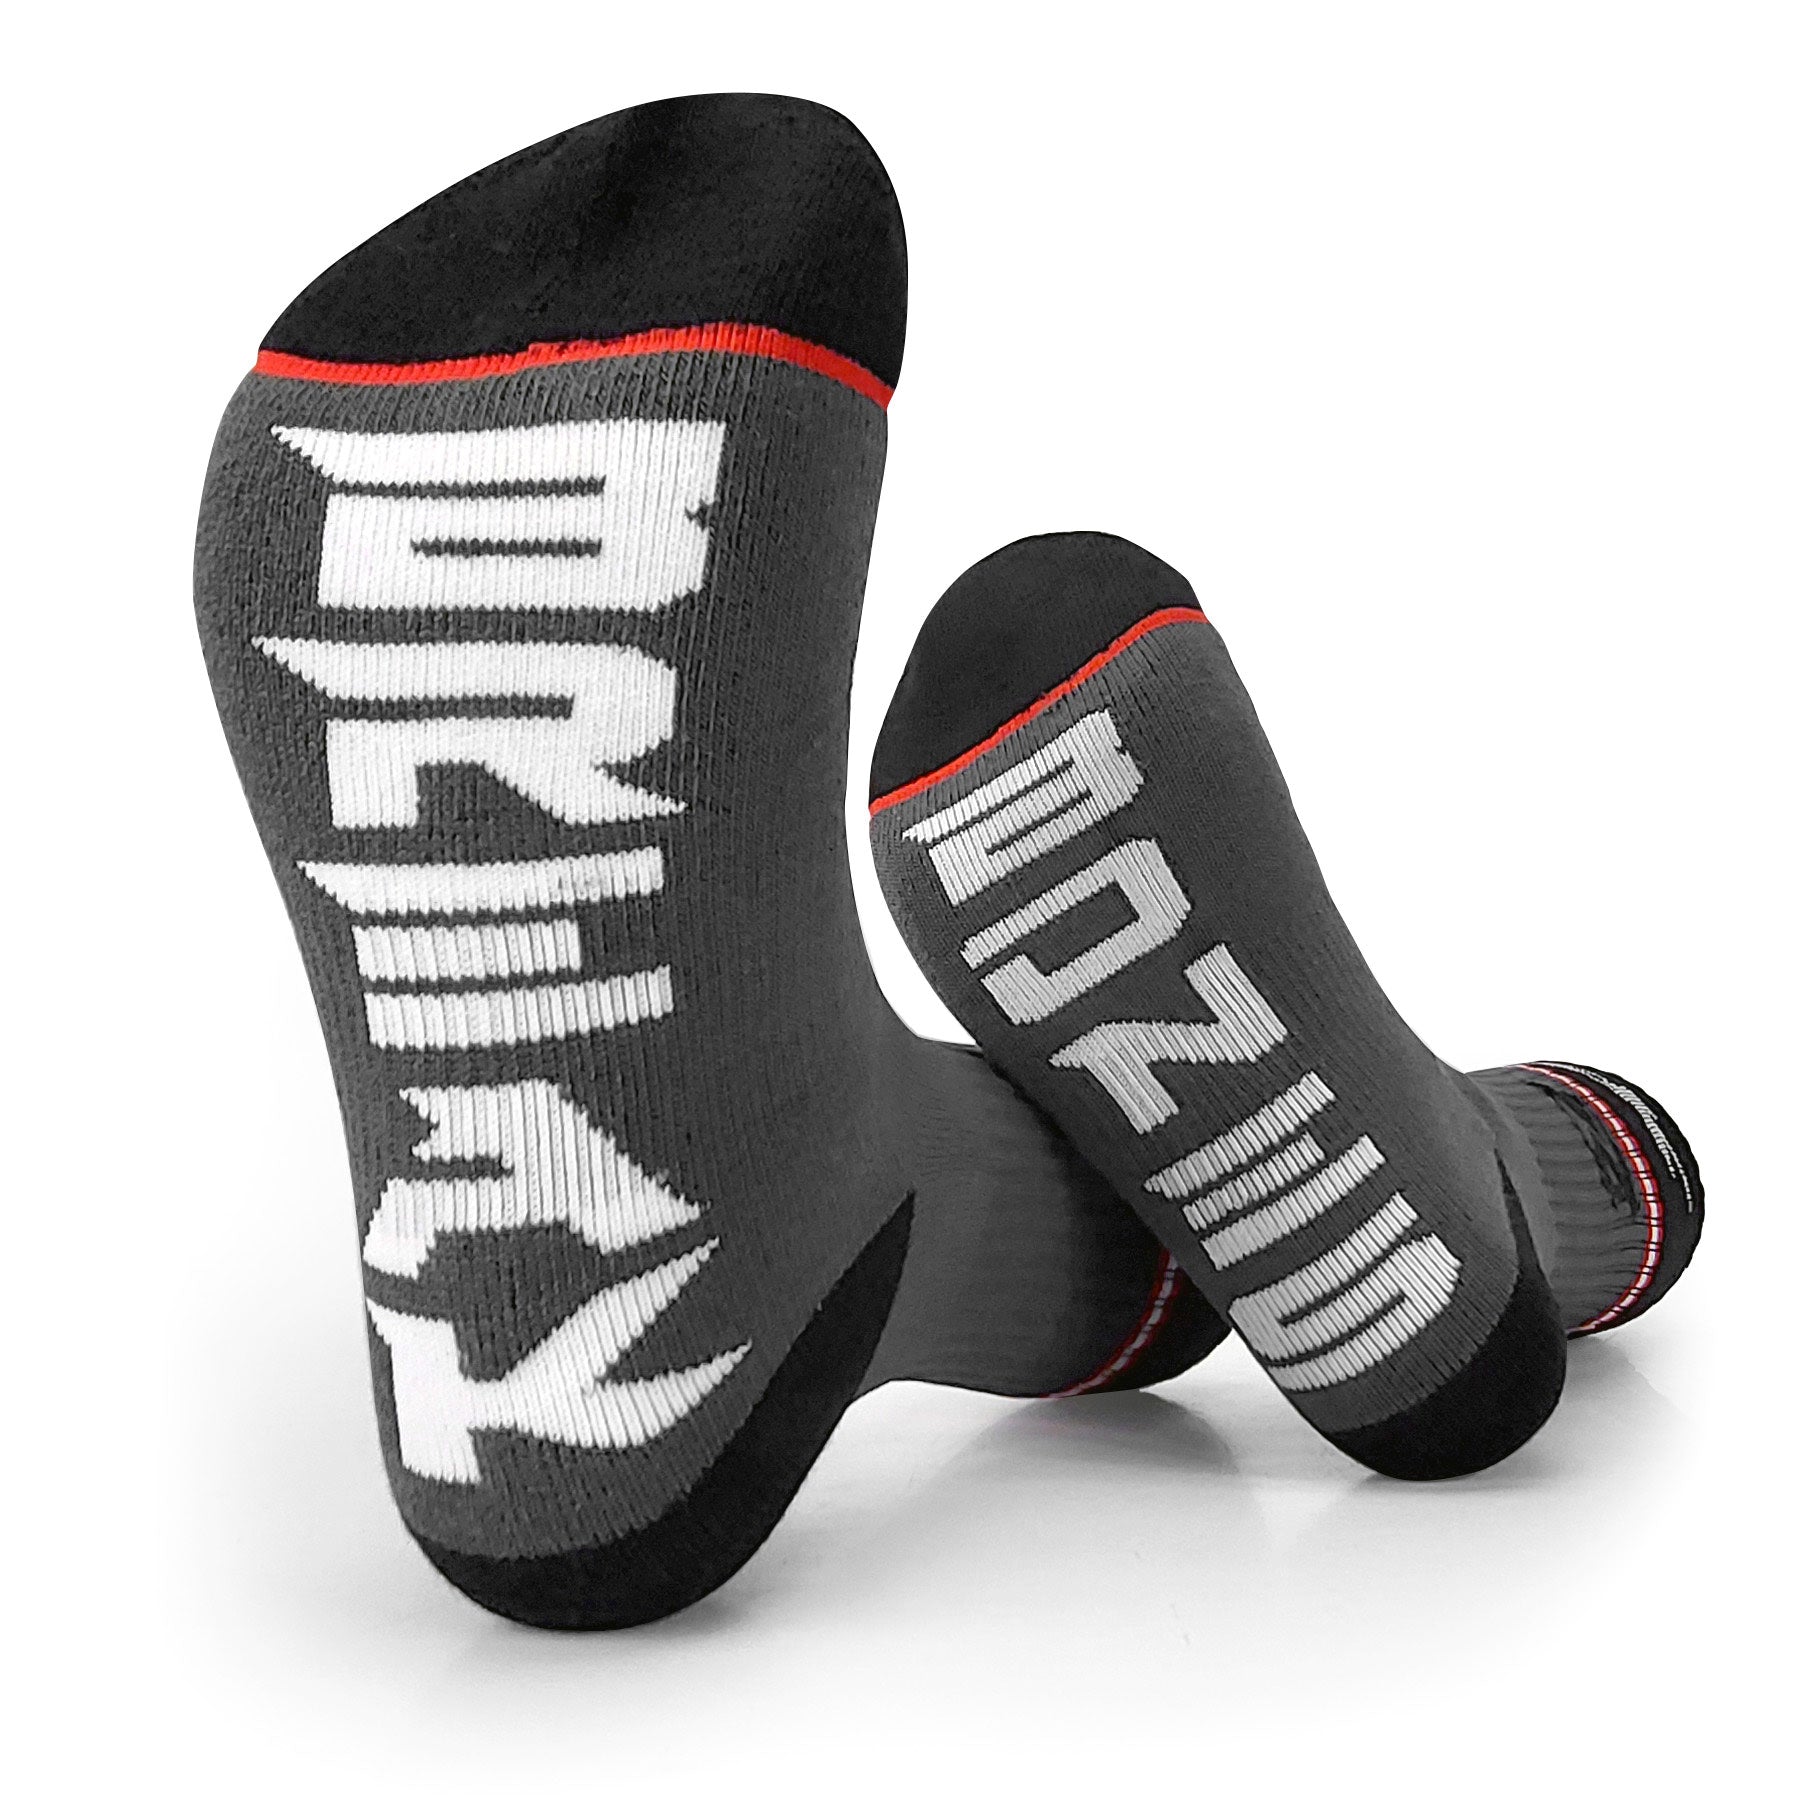 Risk Racing - Break Bones - Motocross Inspired Socks - Partnership with FUEL Apparel - Bottom View